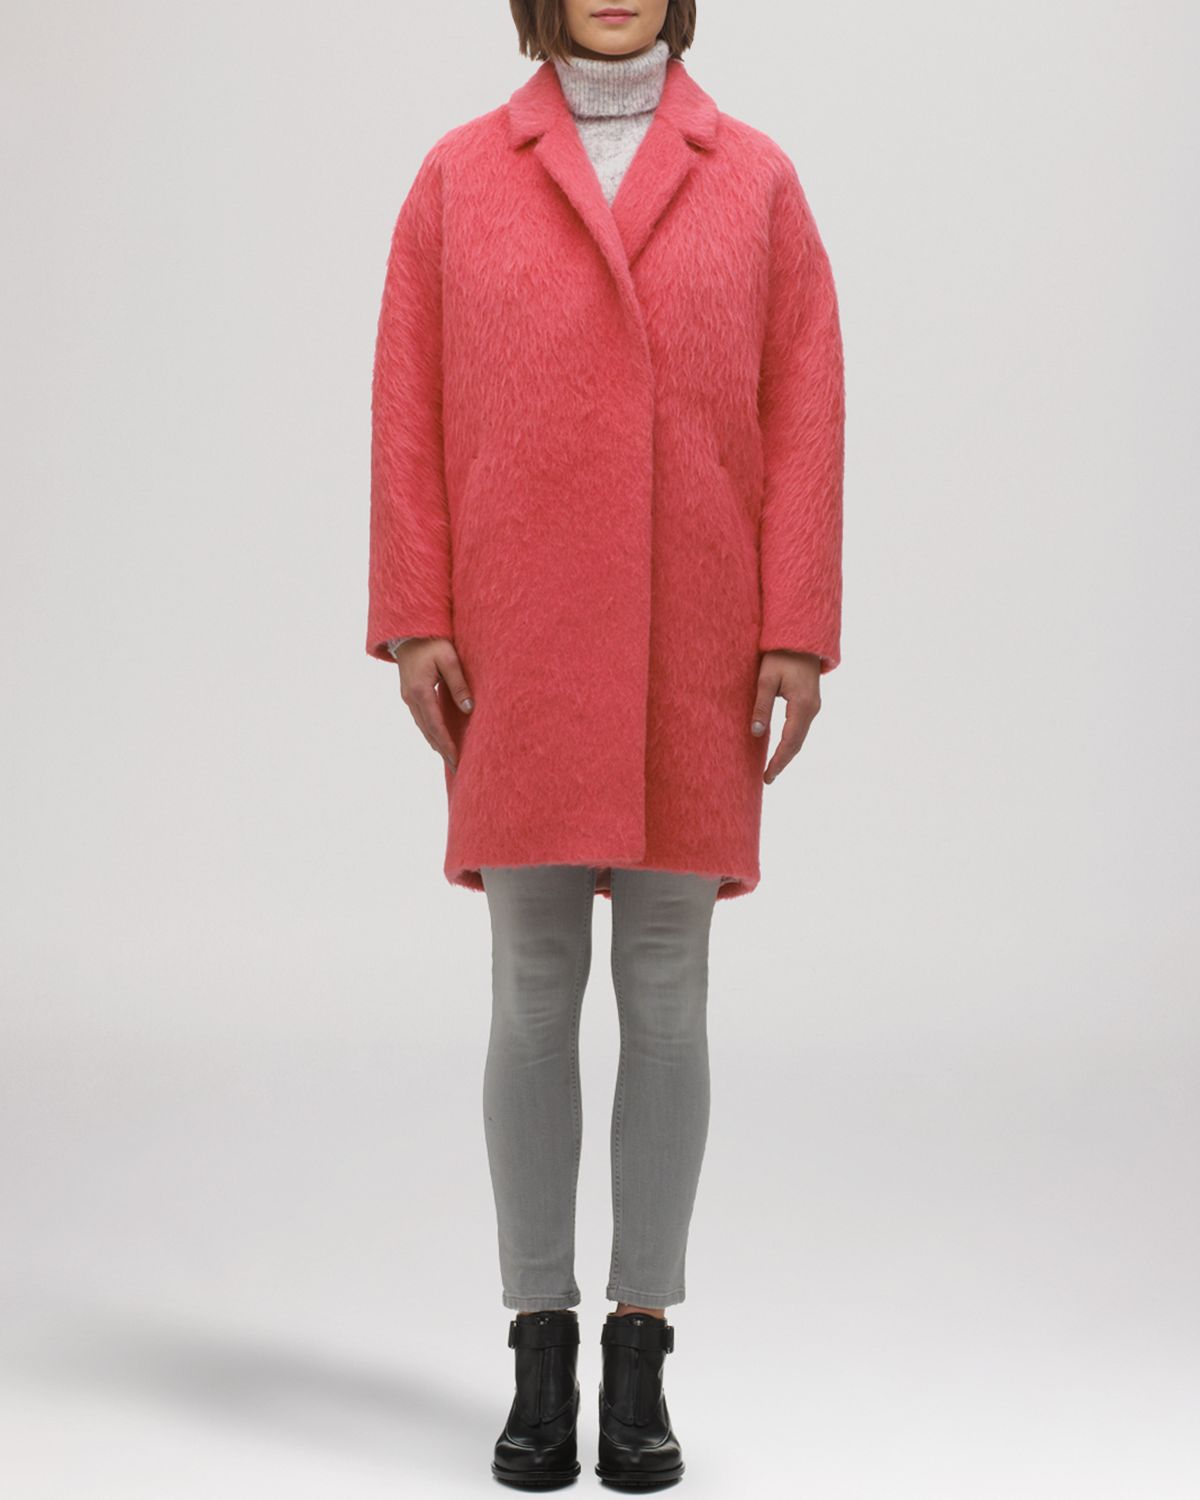 Whistles Coat - Ira Textured Drop Shoulder Cocoon in Pink | Lyst